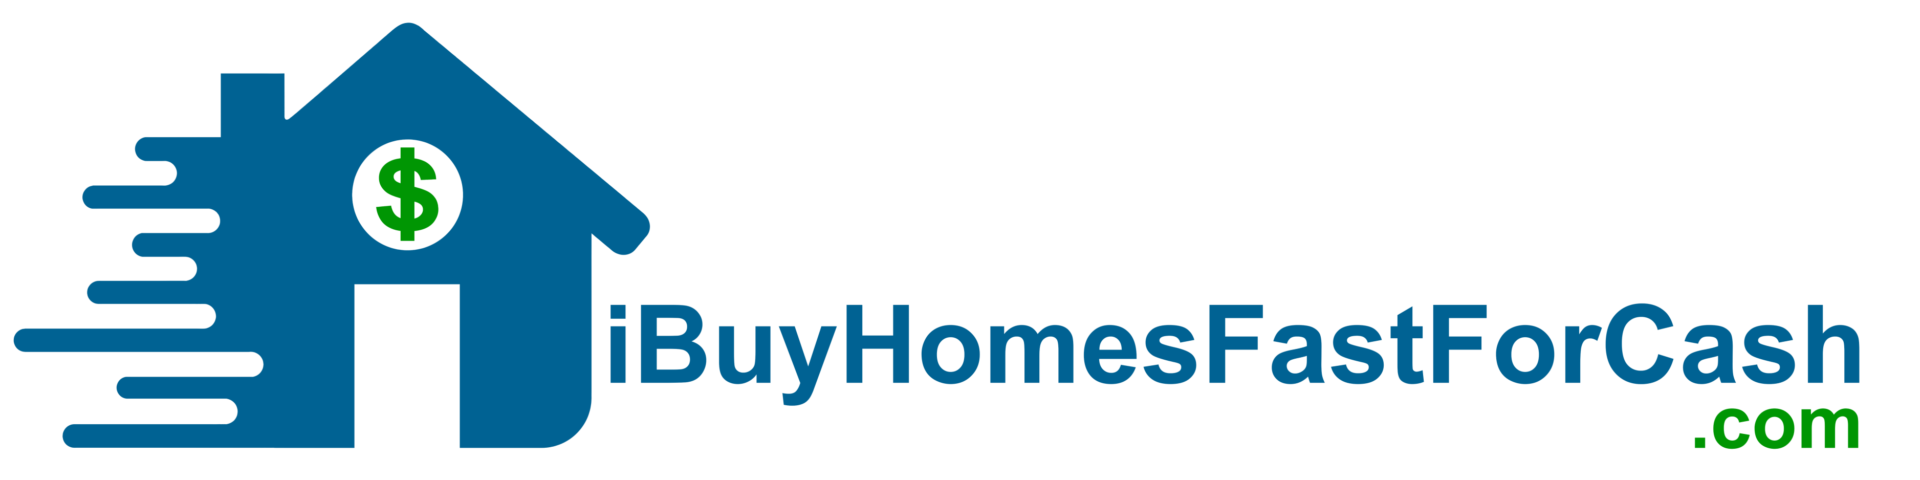 I Buy Homes Fast For Cash logo